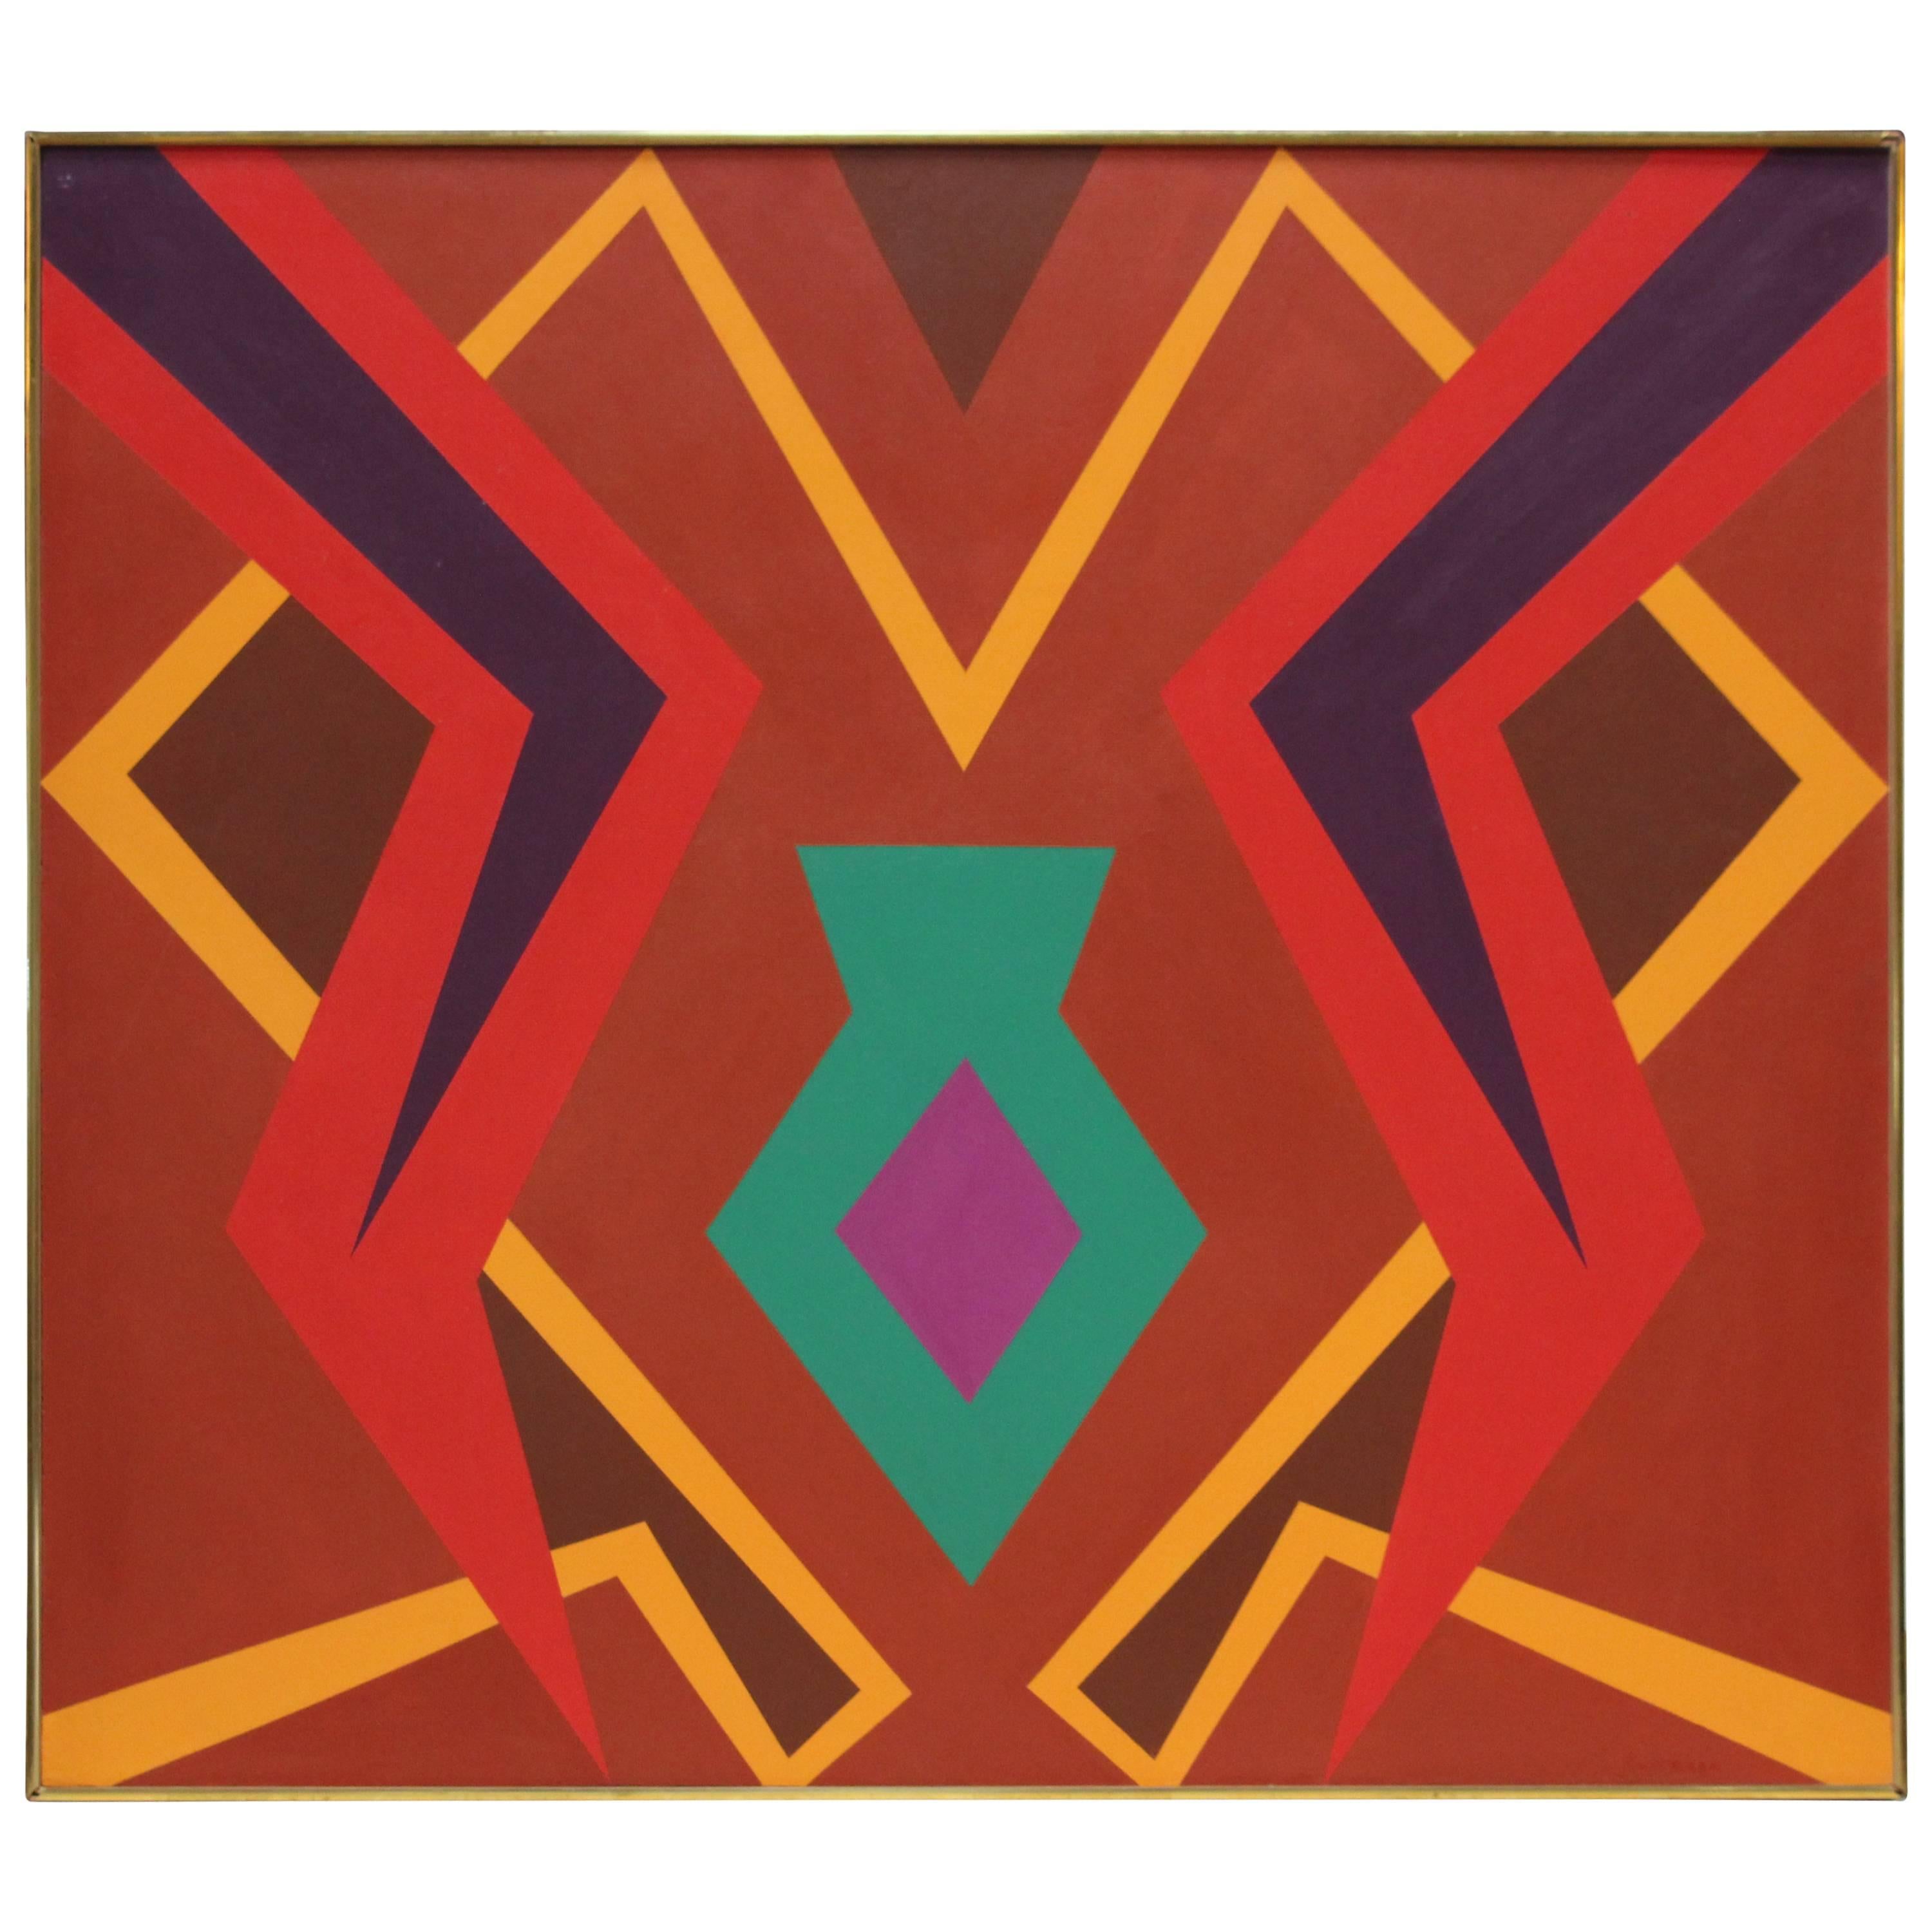 Geometric Abstract Painting by Herbert Busemann